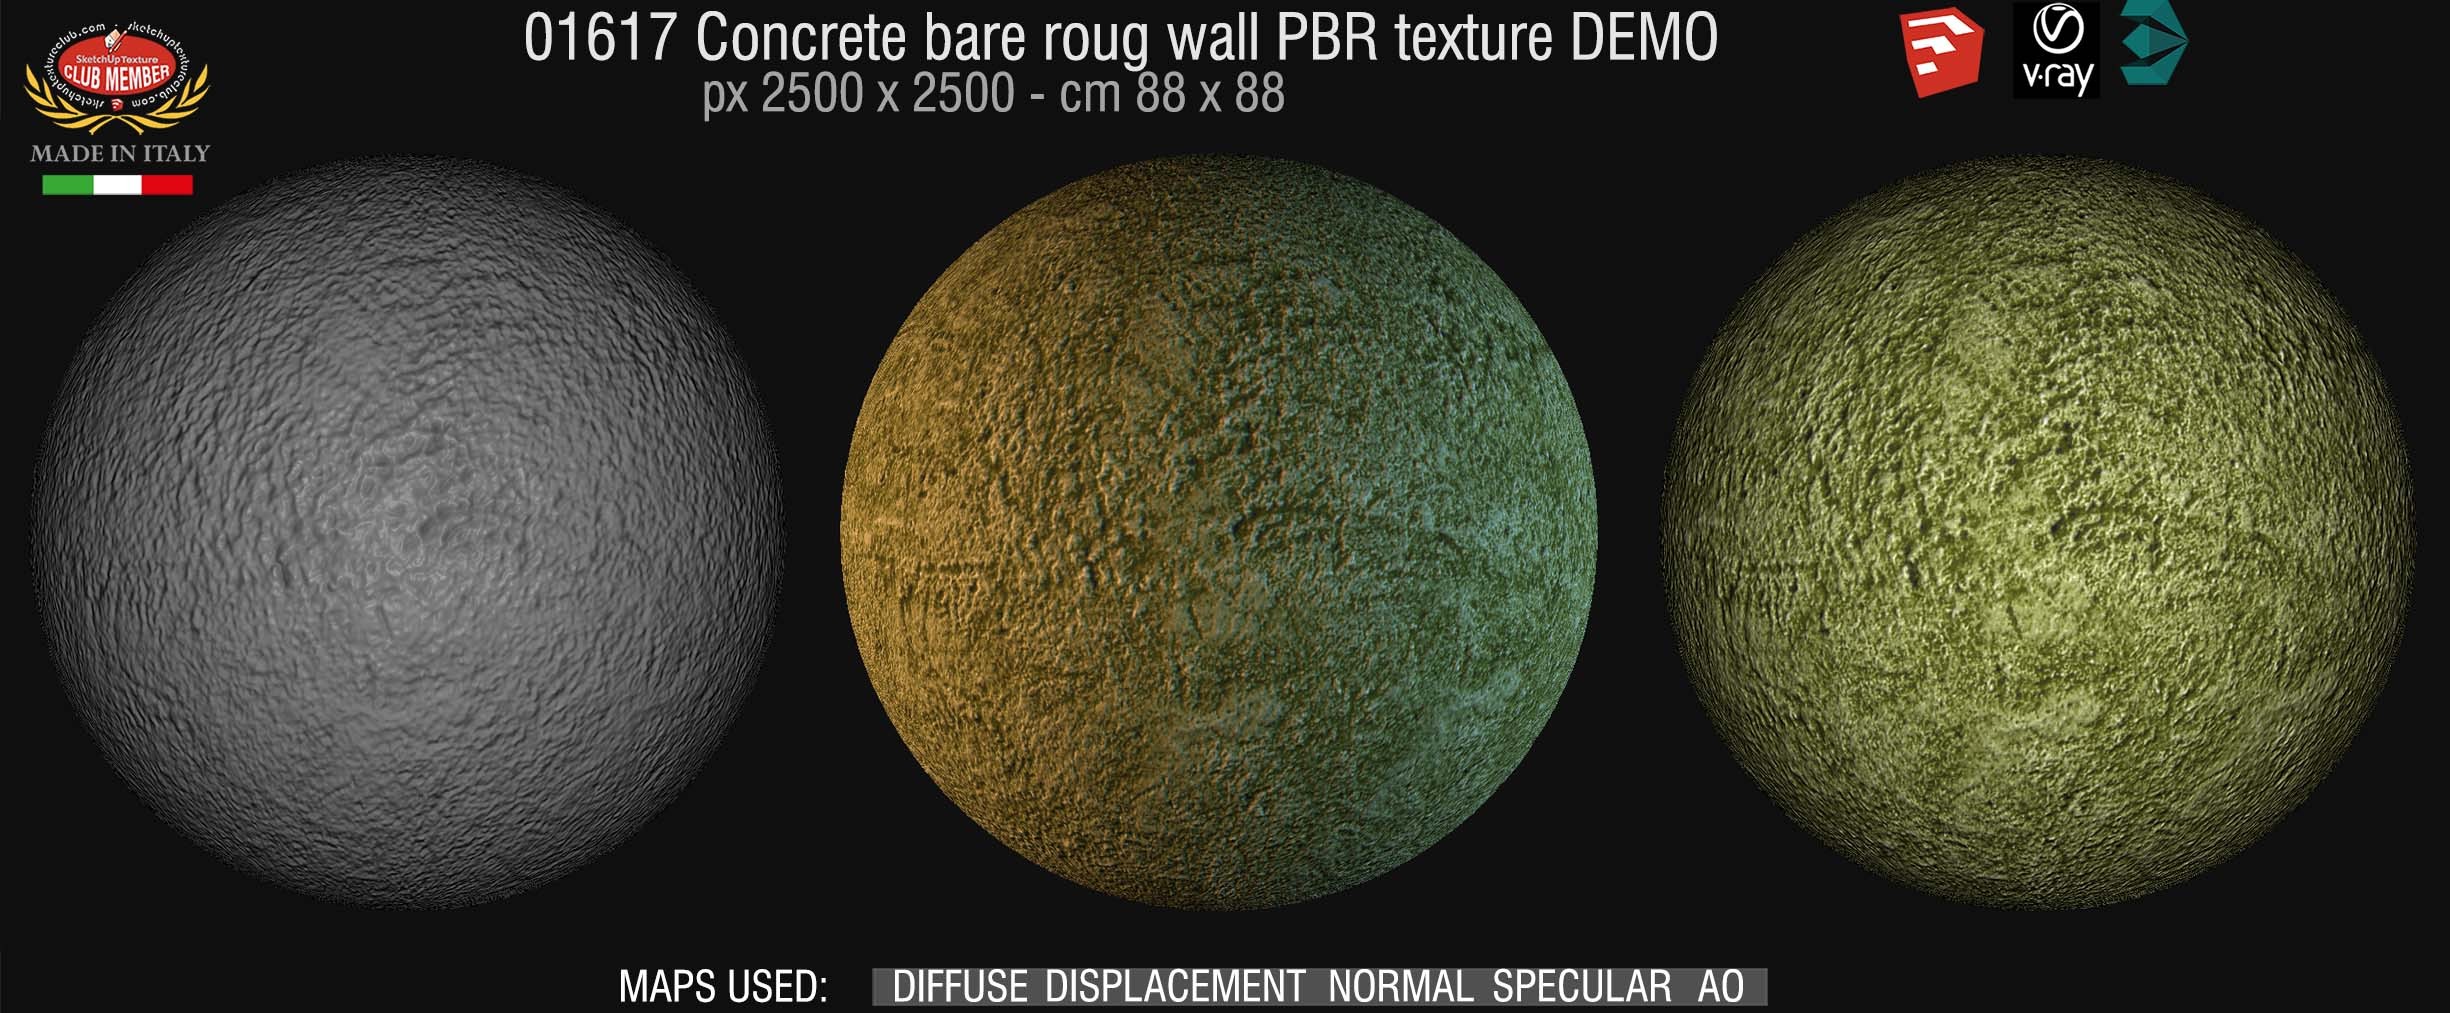 01617 Concrete bare rough wall PBR texture seamless DEMO